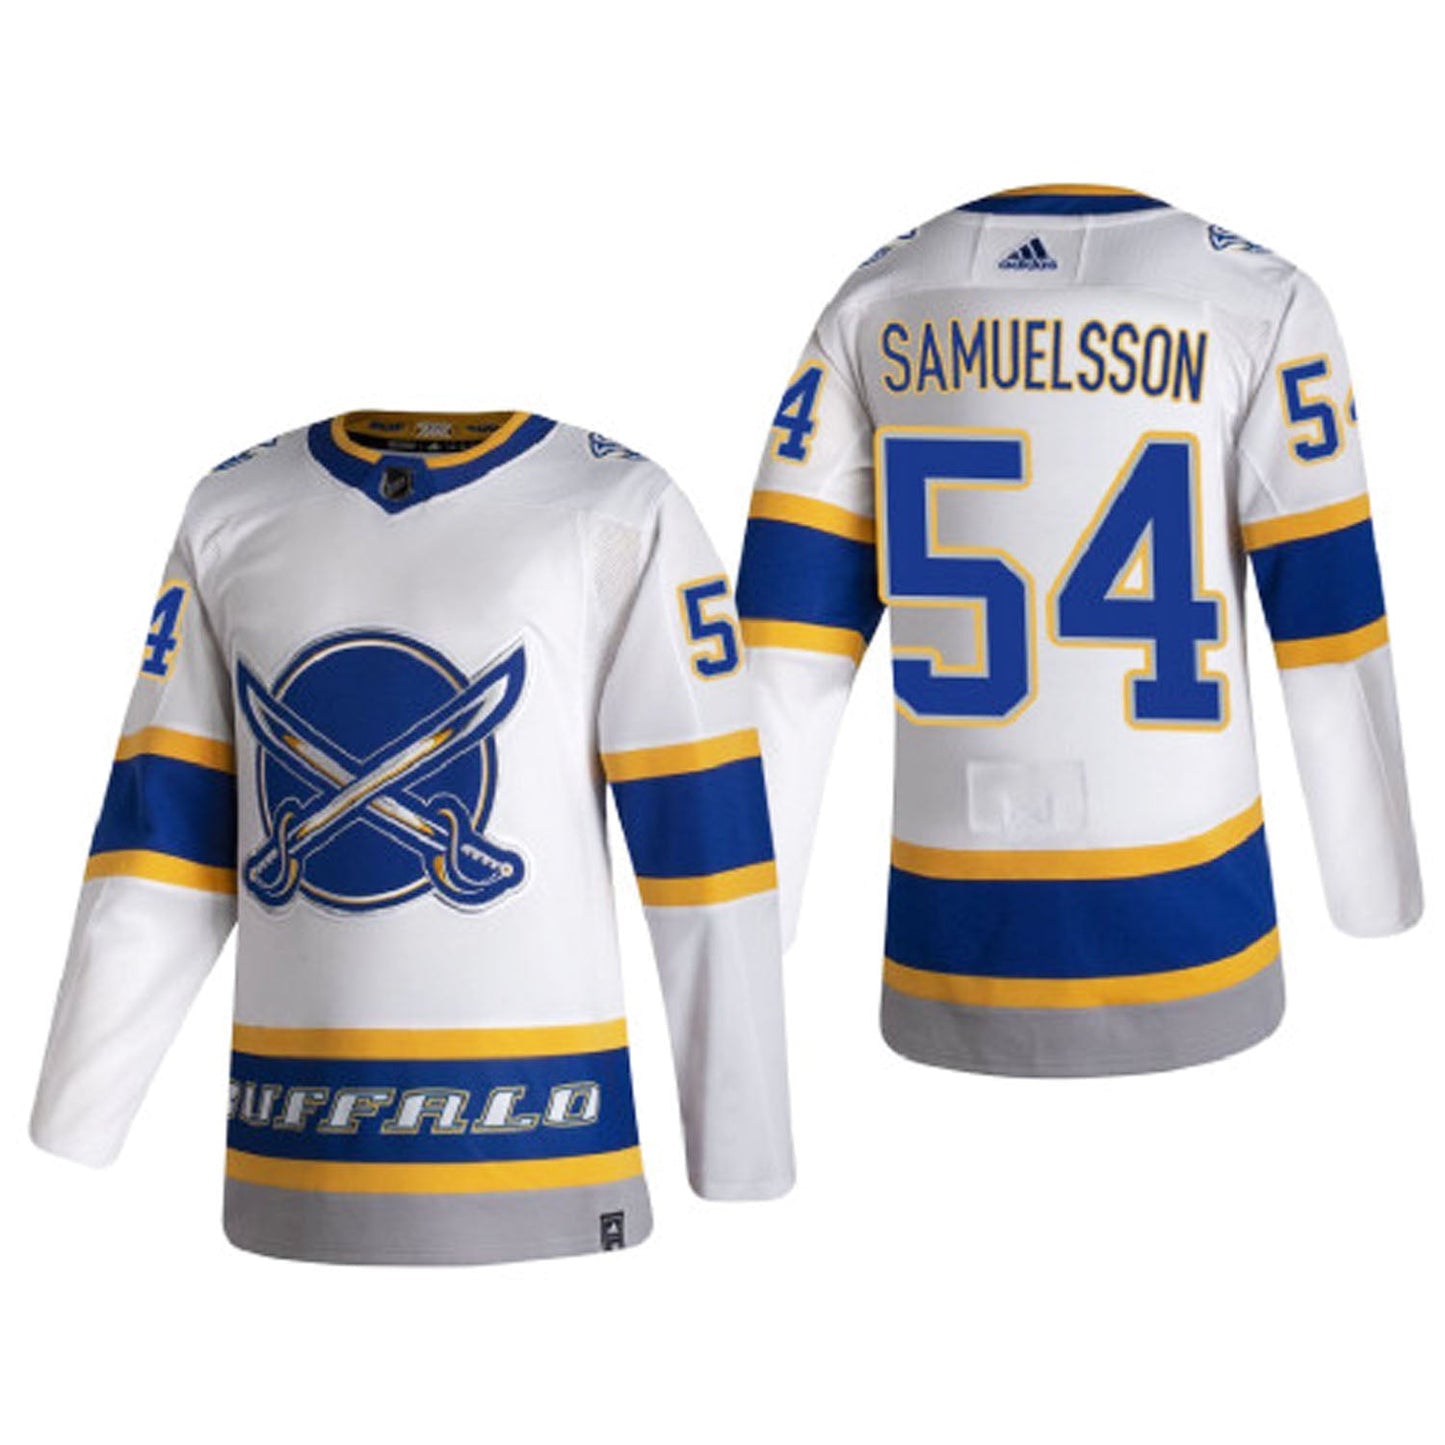 NHL Mattias Samuelsson Buffalo Sabres 43 Jersey